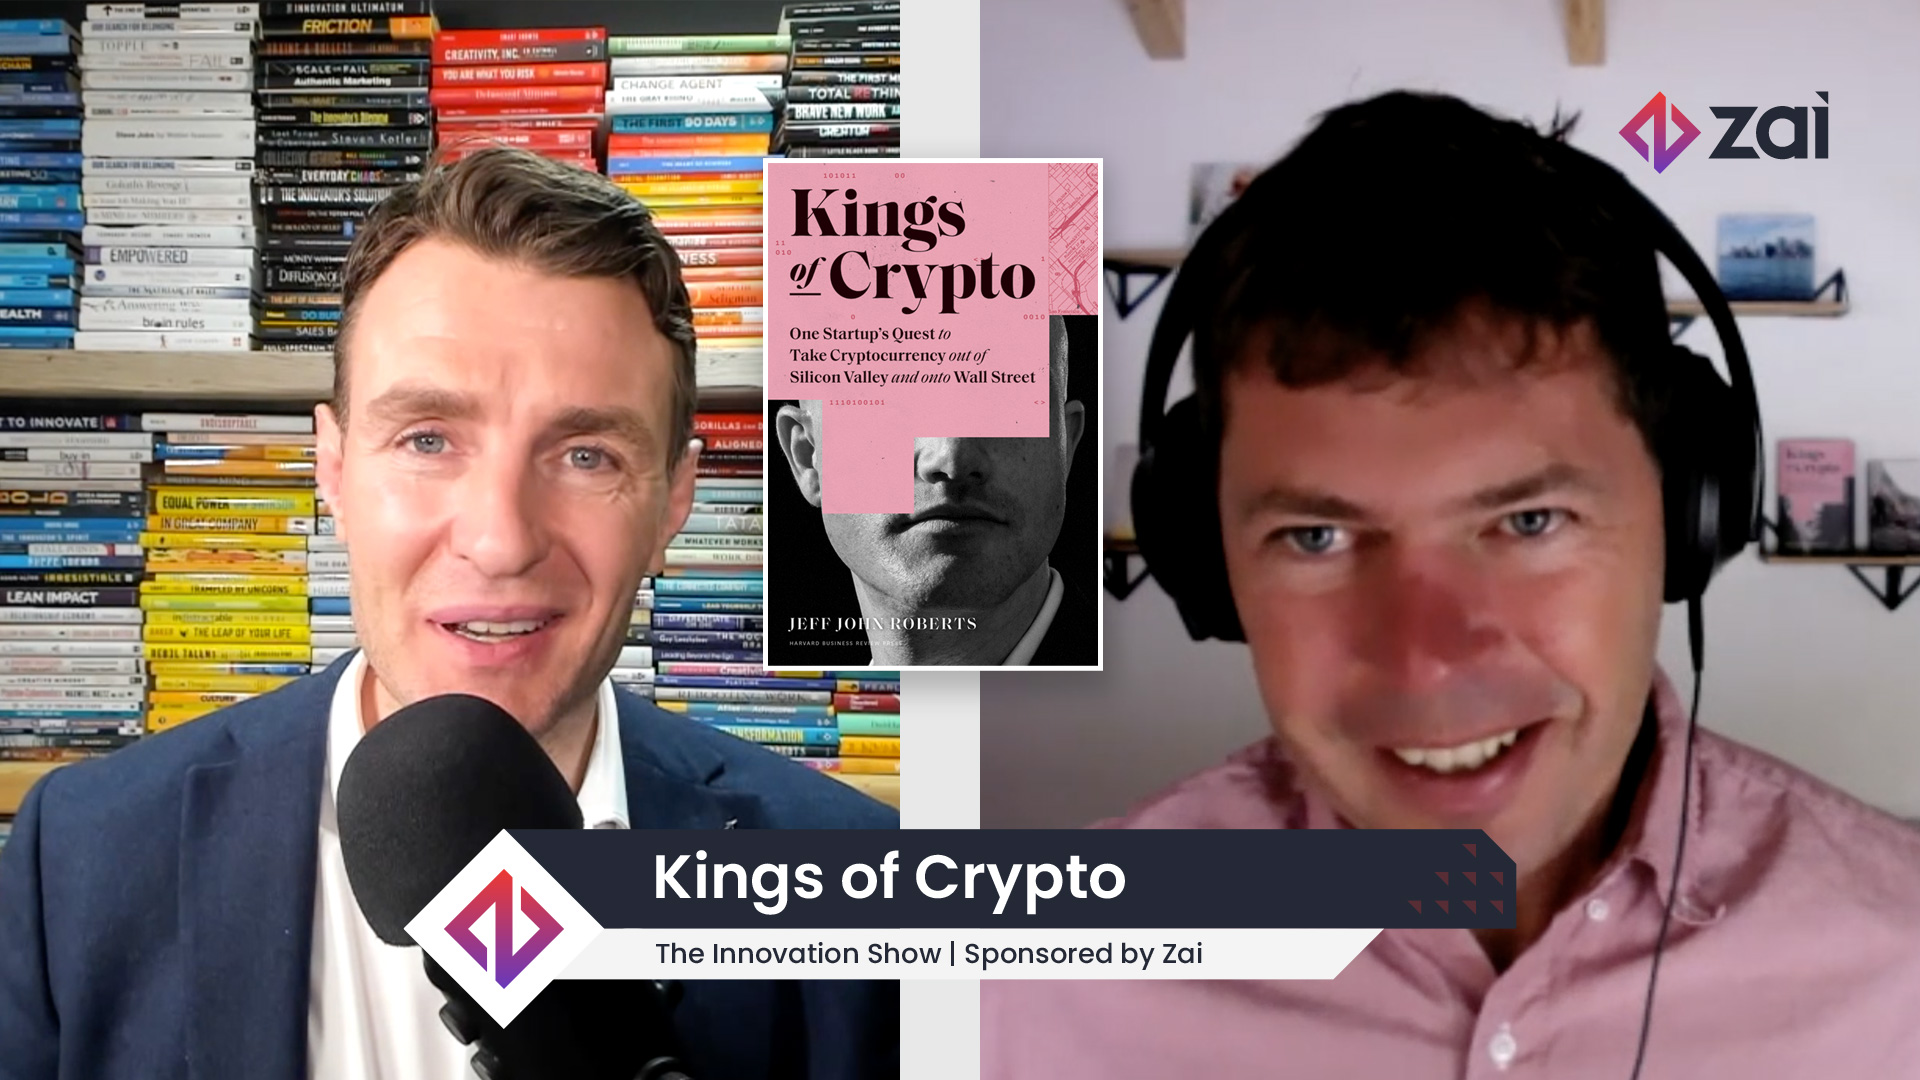 Kings Of Crypto: Aidan McCullen meets Jeff John Roberts